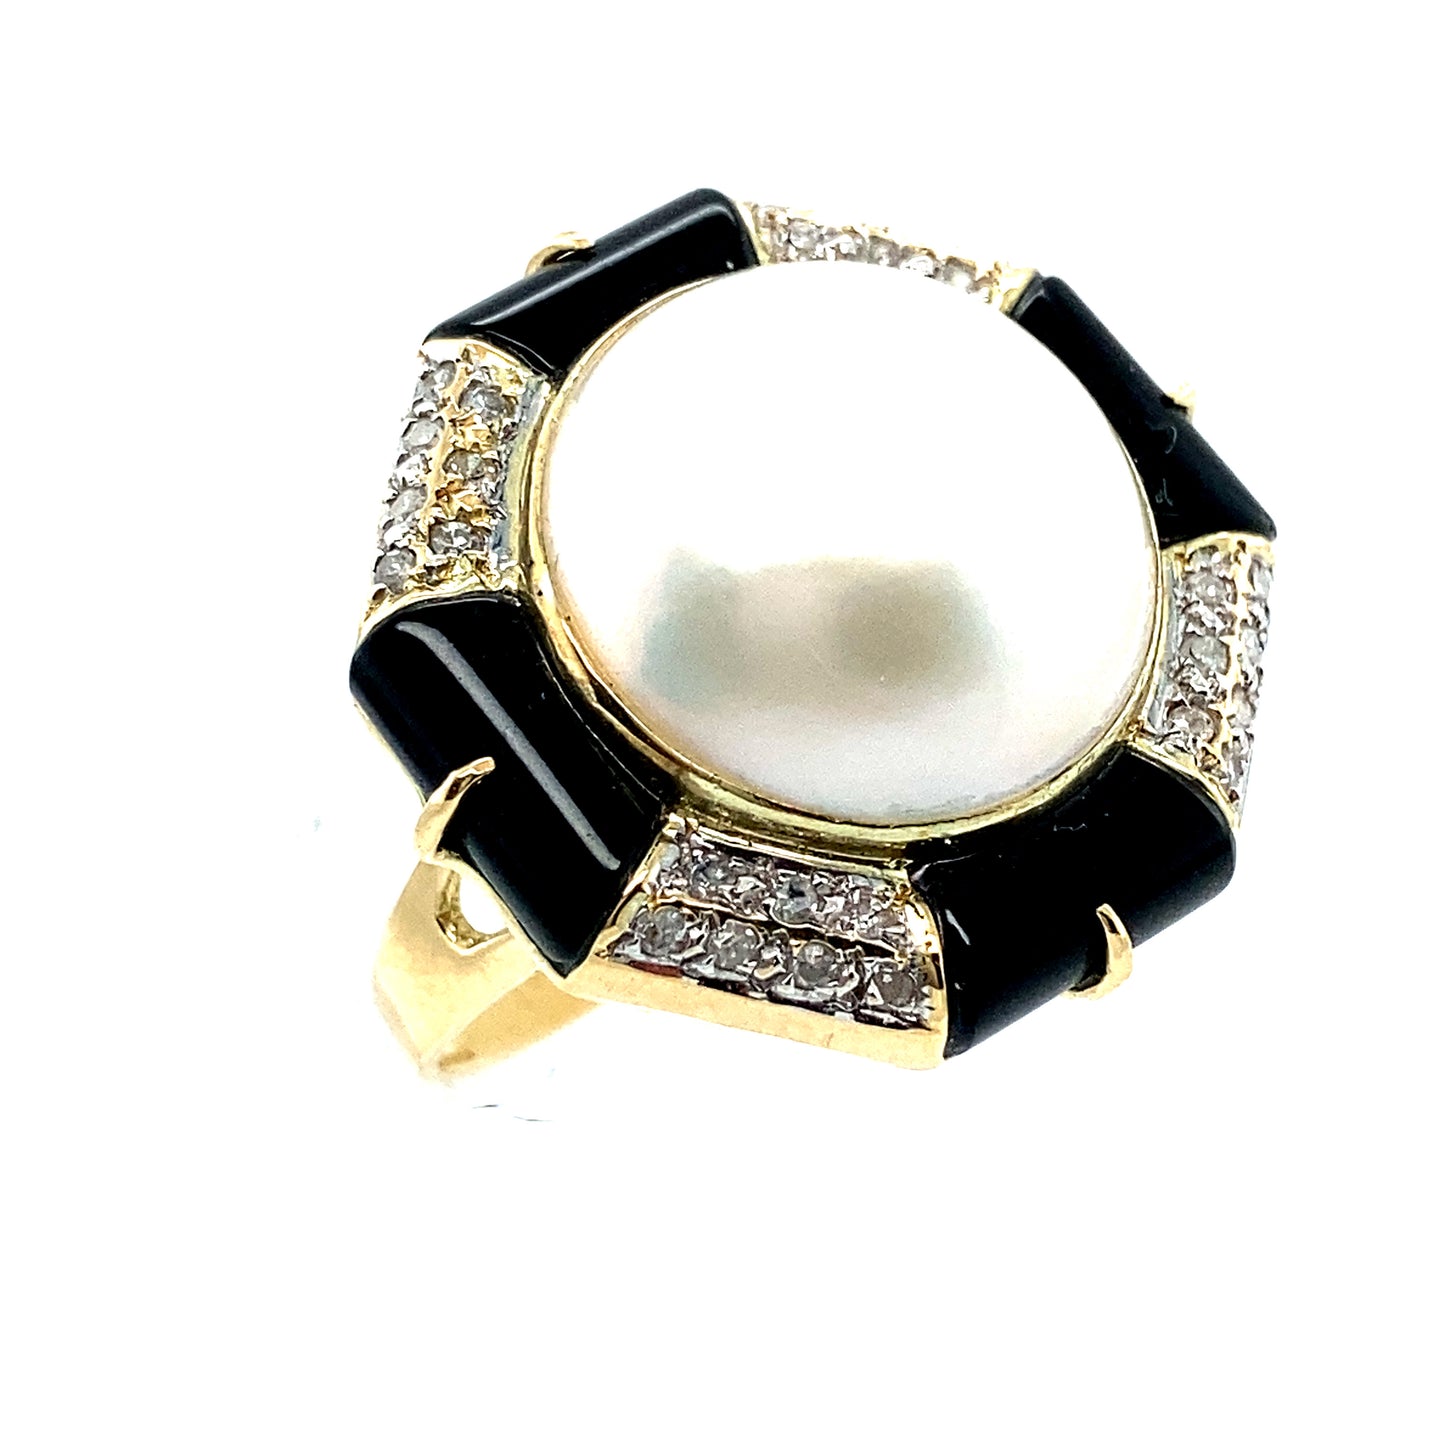 14K Yellow Gold Mabé Pearl/Onyx/Diamond Ring